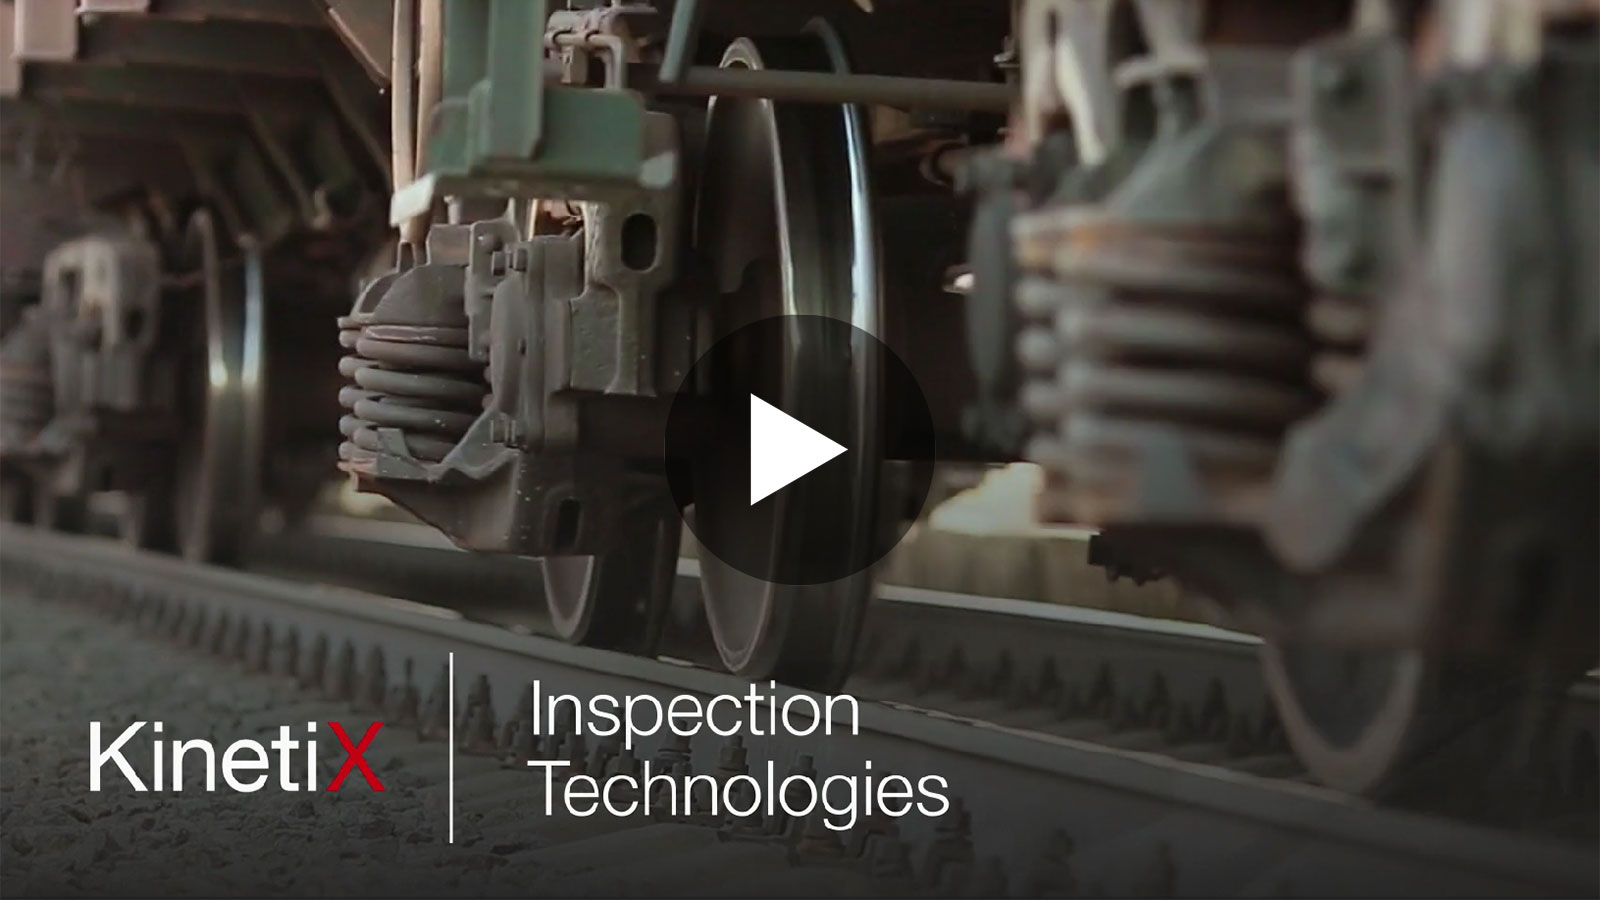 KinetiX Inspection Technologies│Wabtec Corporation